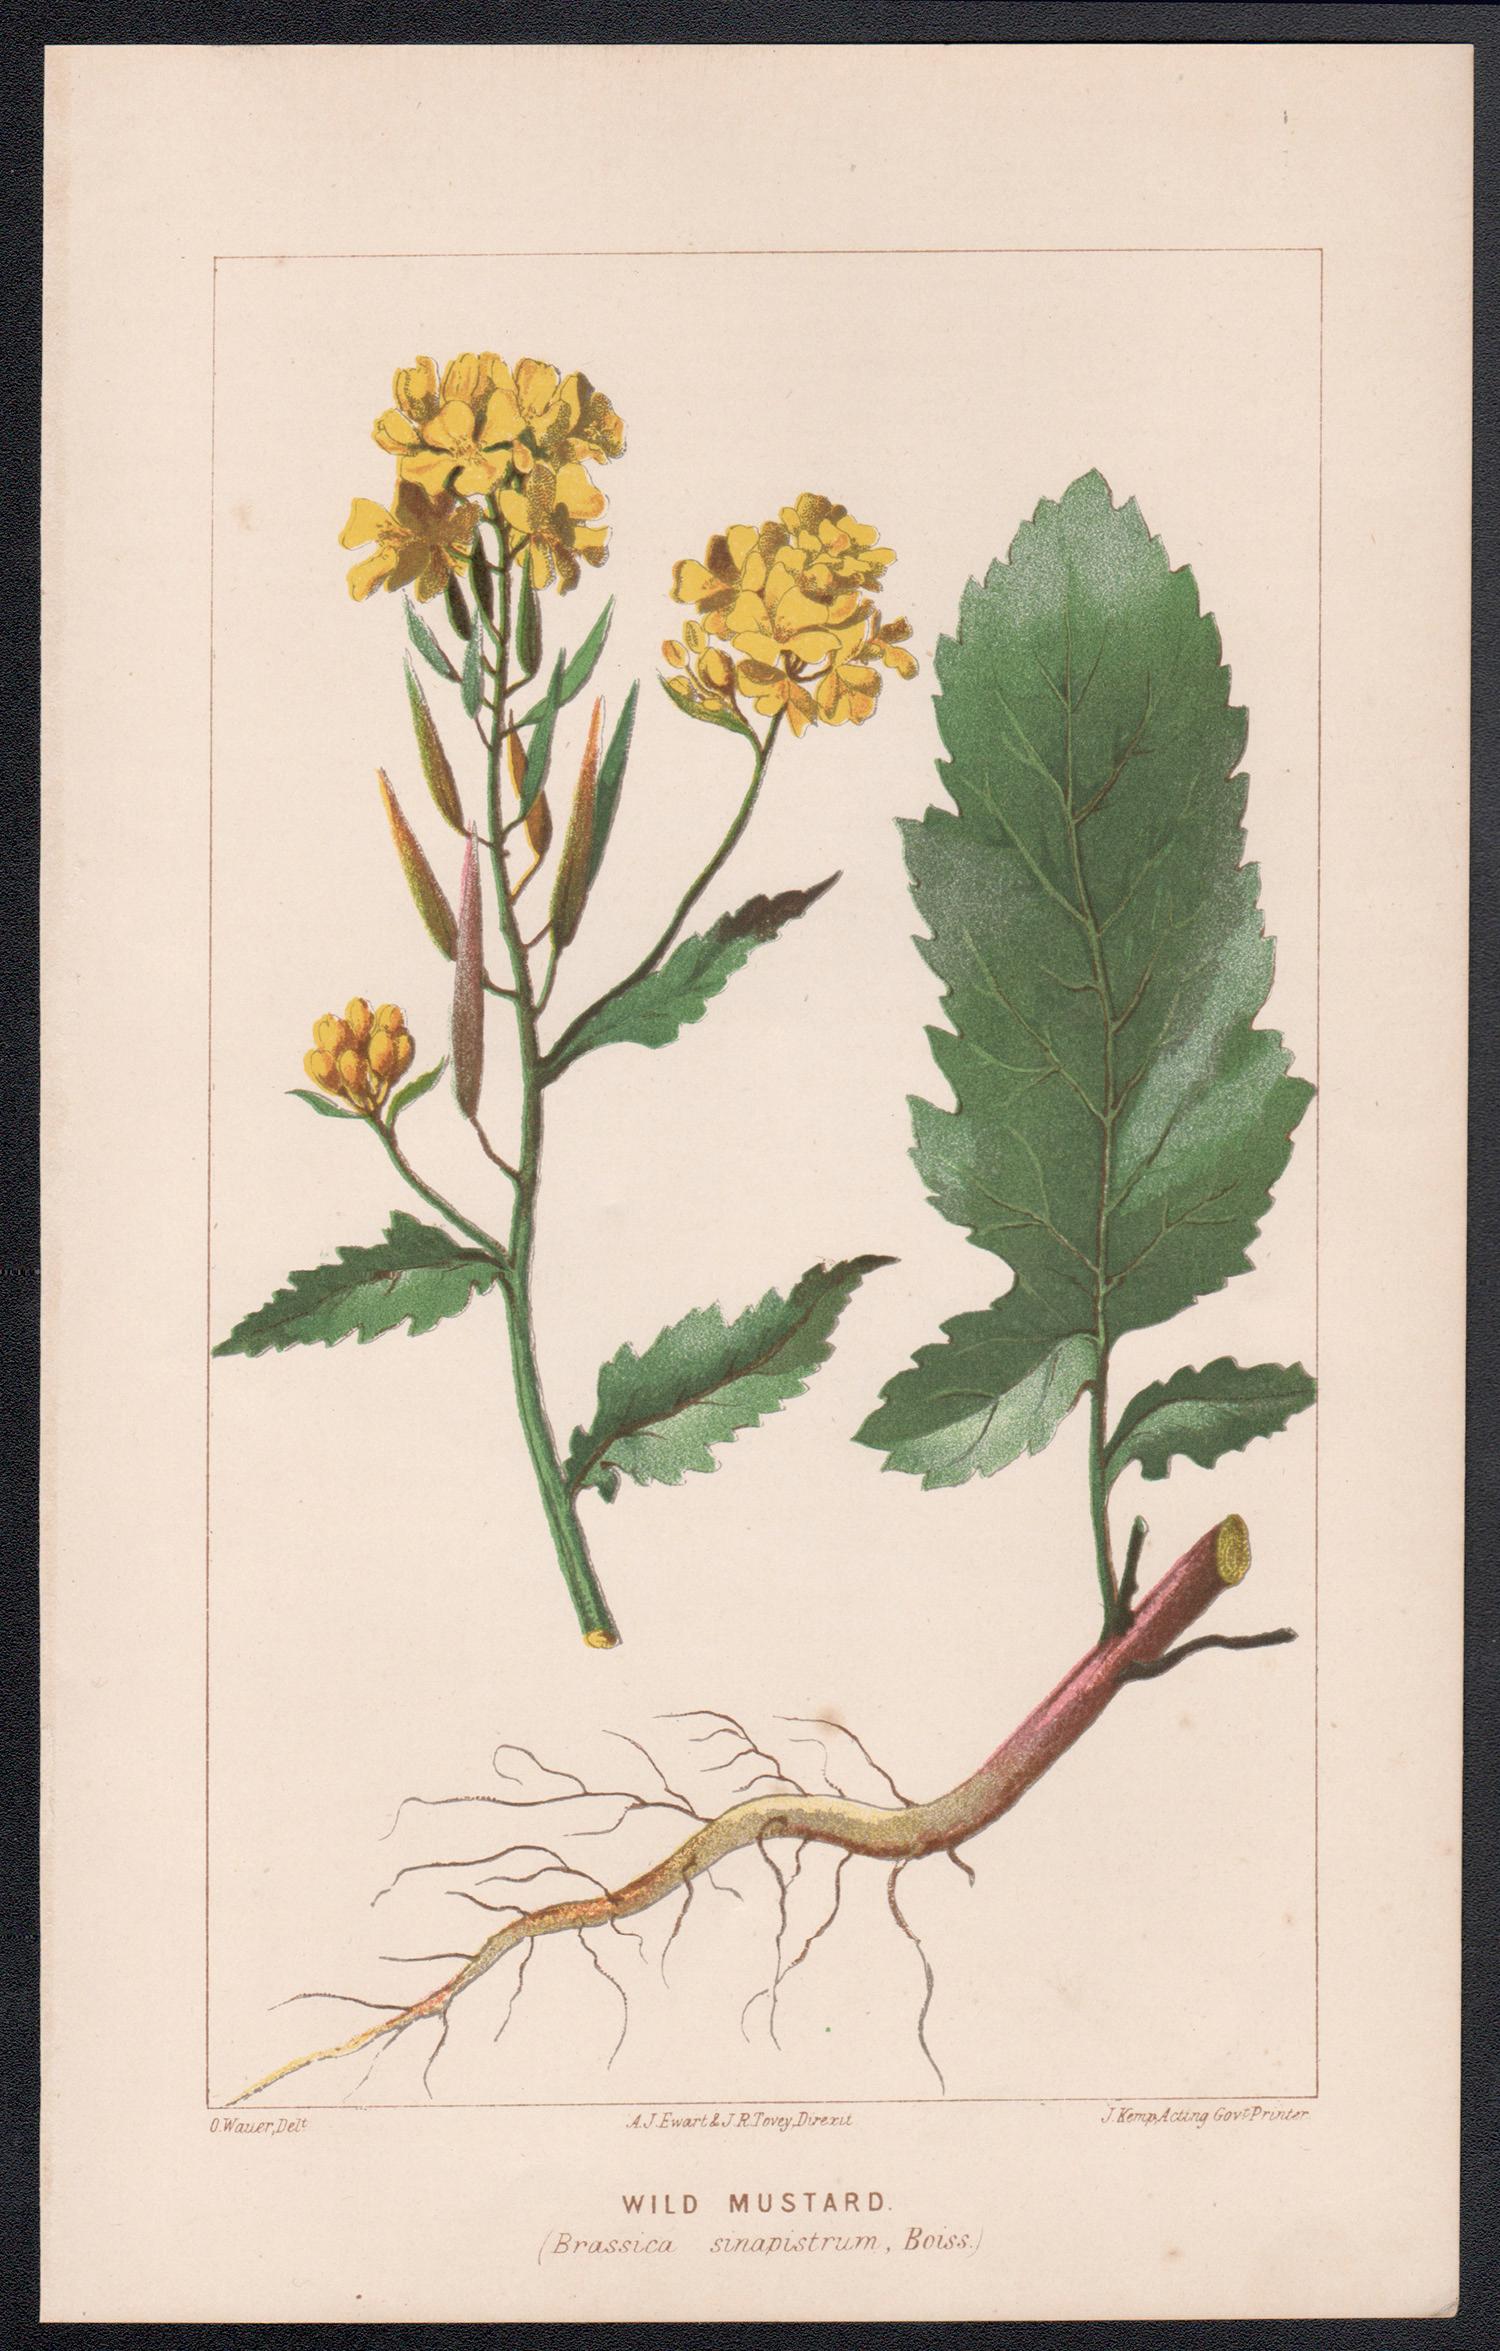 Wild Mustard (Brassica sinapistrum), antique botanical lithograph - Print by O Wauer